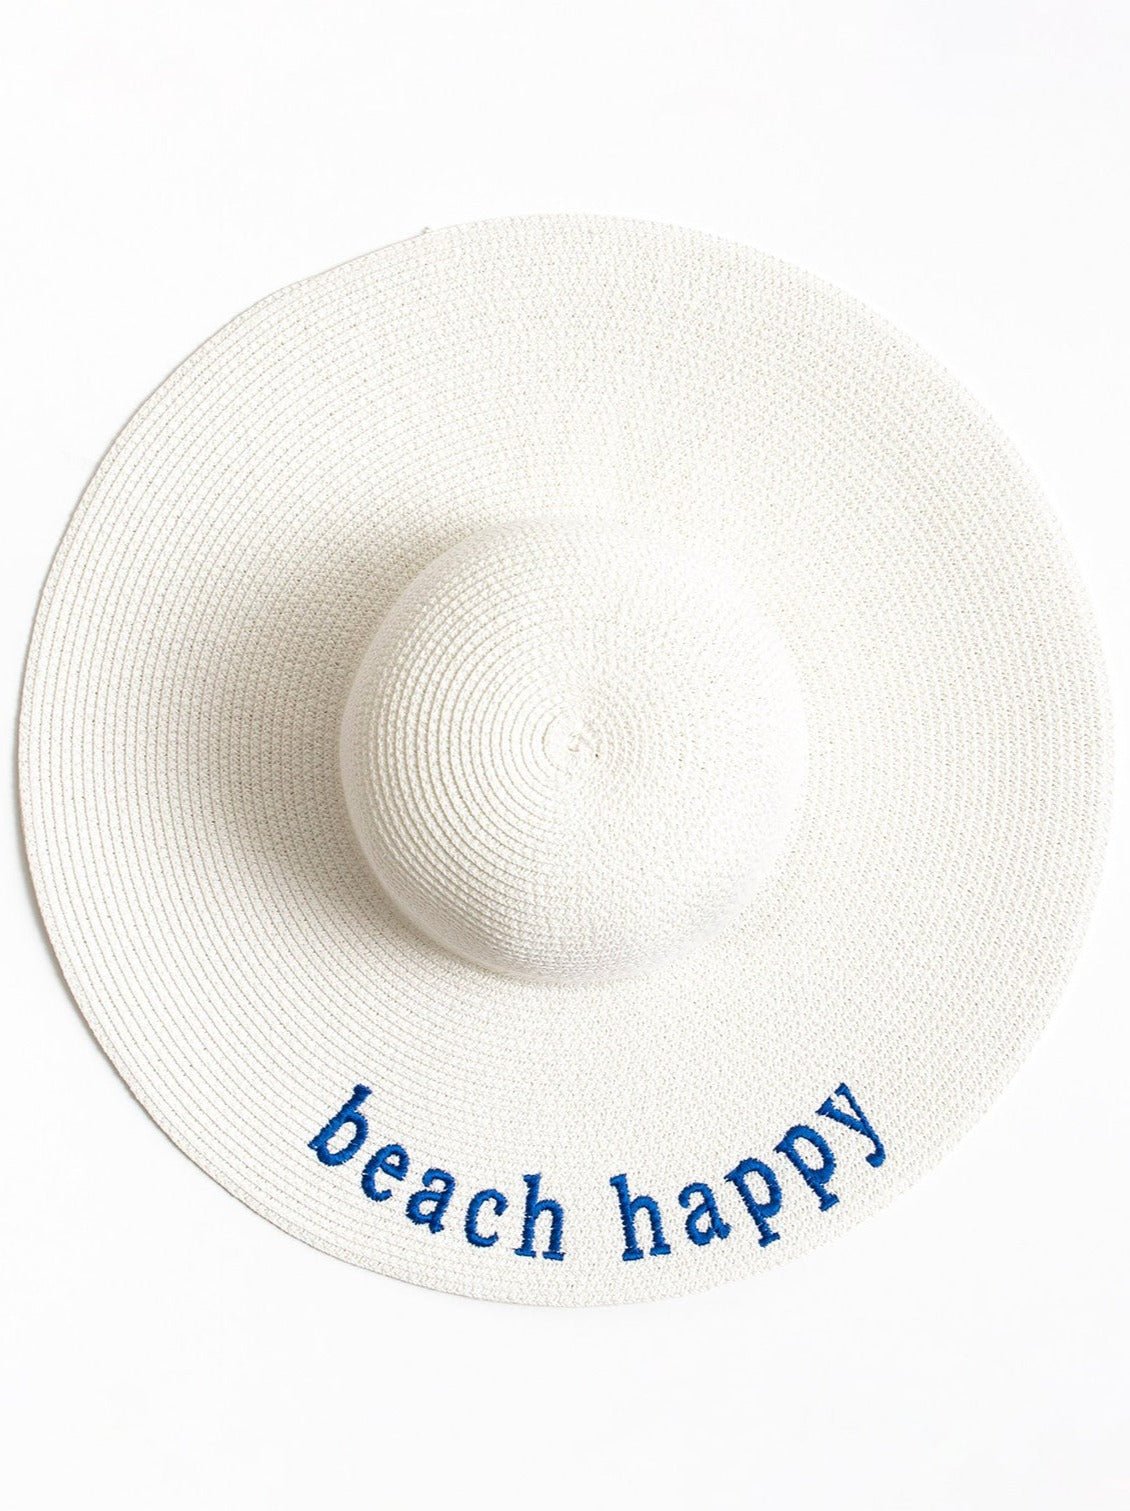 Beach Happy Floppy Hat - 30A Gear - caps women